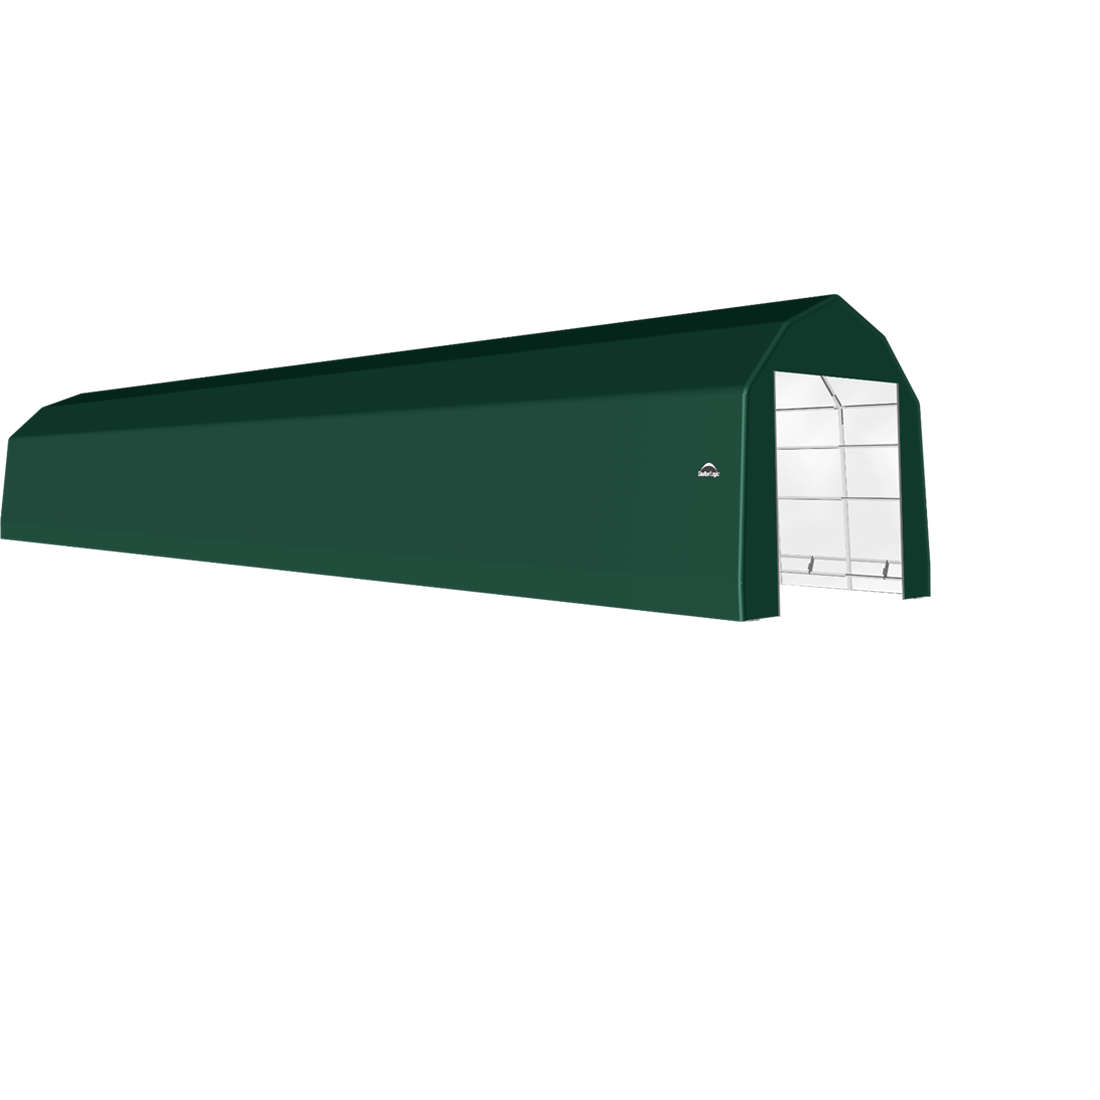 ShelterTech SP Series Barn Shelter, 15 ft. x 84 ft. x 14 ft. Heavy Duty PVC 14.5 oz. Green